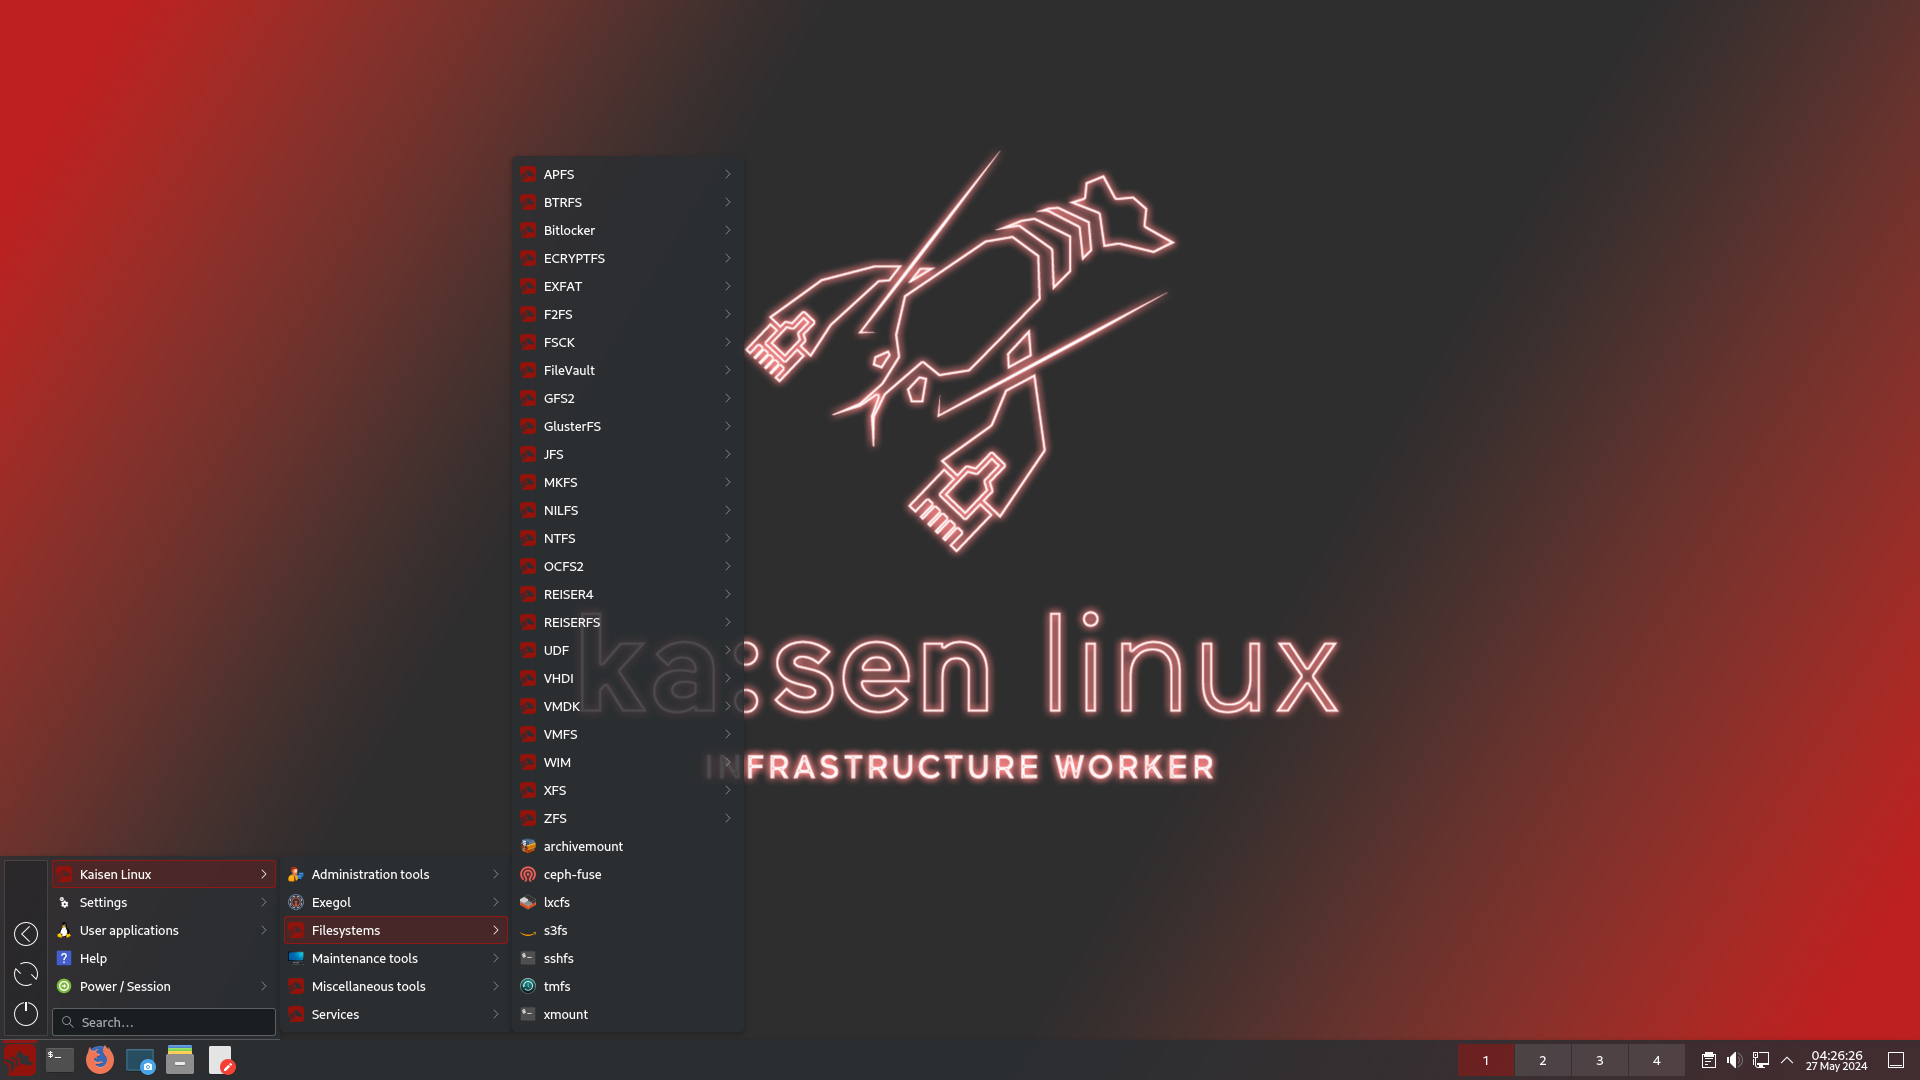 kaisen linux KDE with filesystems menu